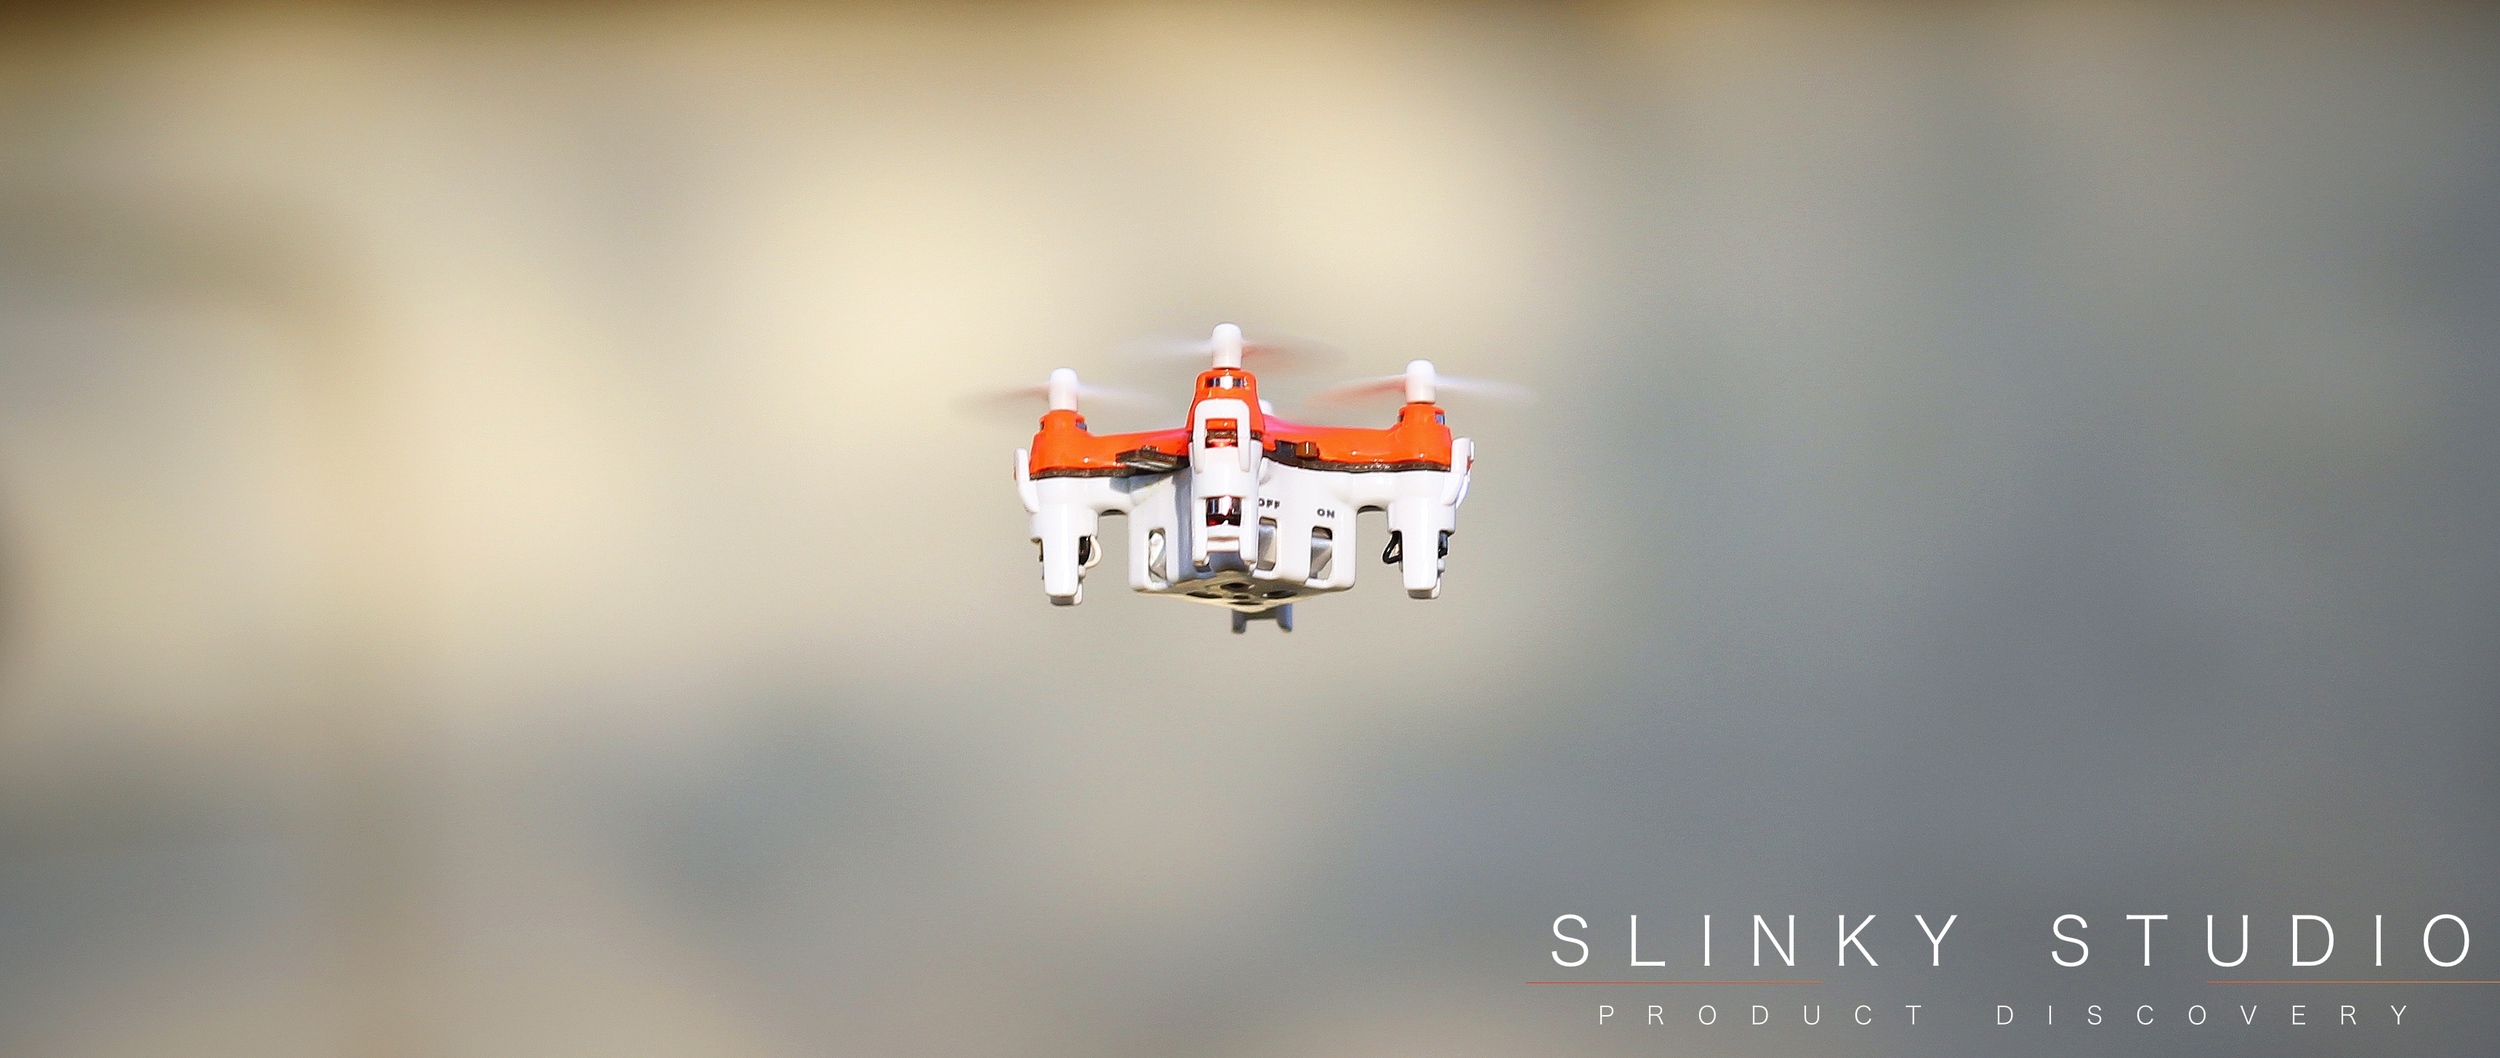 BuzzBee Nano Drone Flying Sky View.jpg